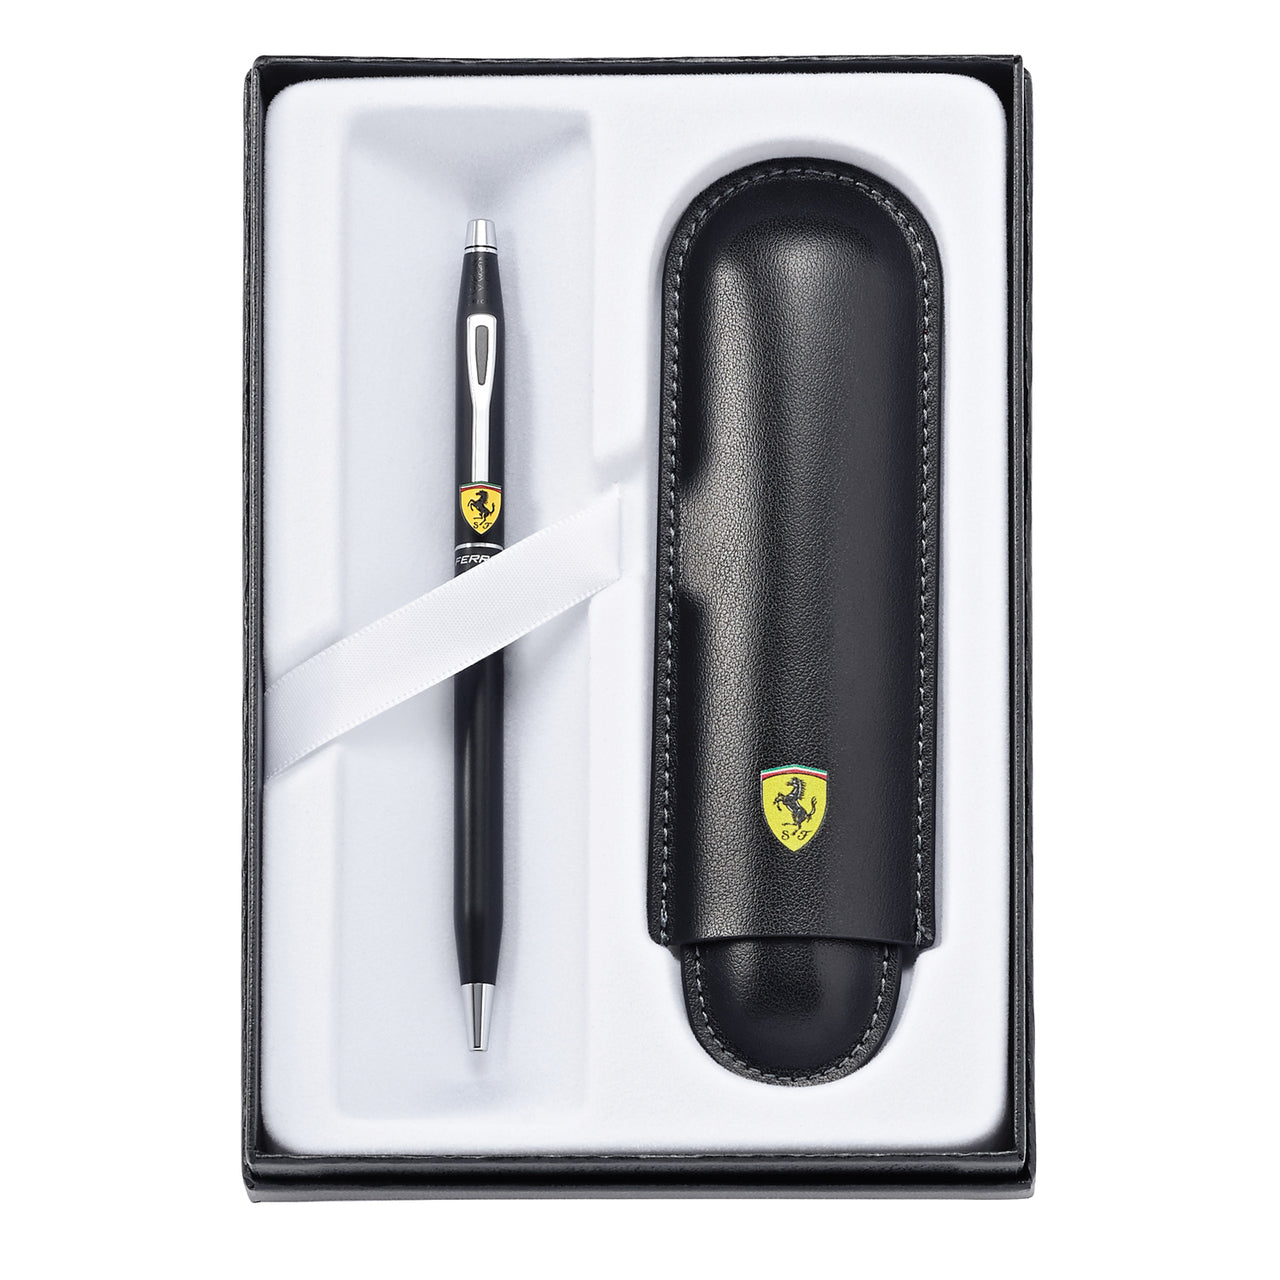 Ferrari Century Matte Black Lacquer Ballpoint Pen with Black Genuine Leather Pen Pouch Gift Set